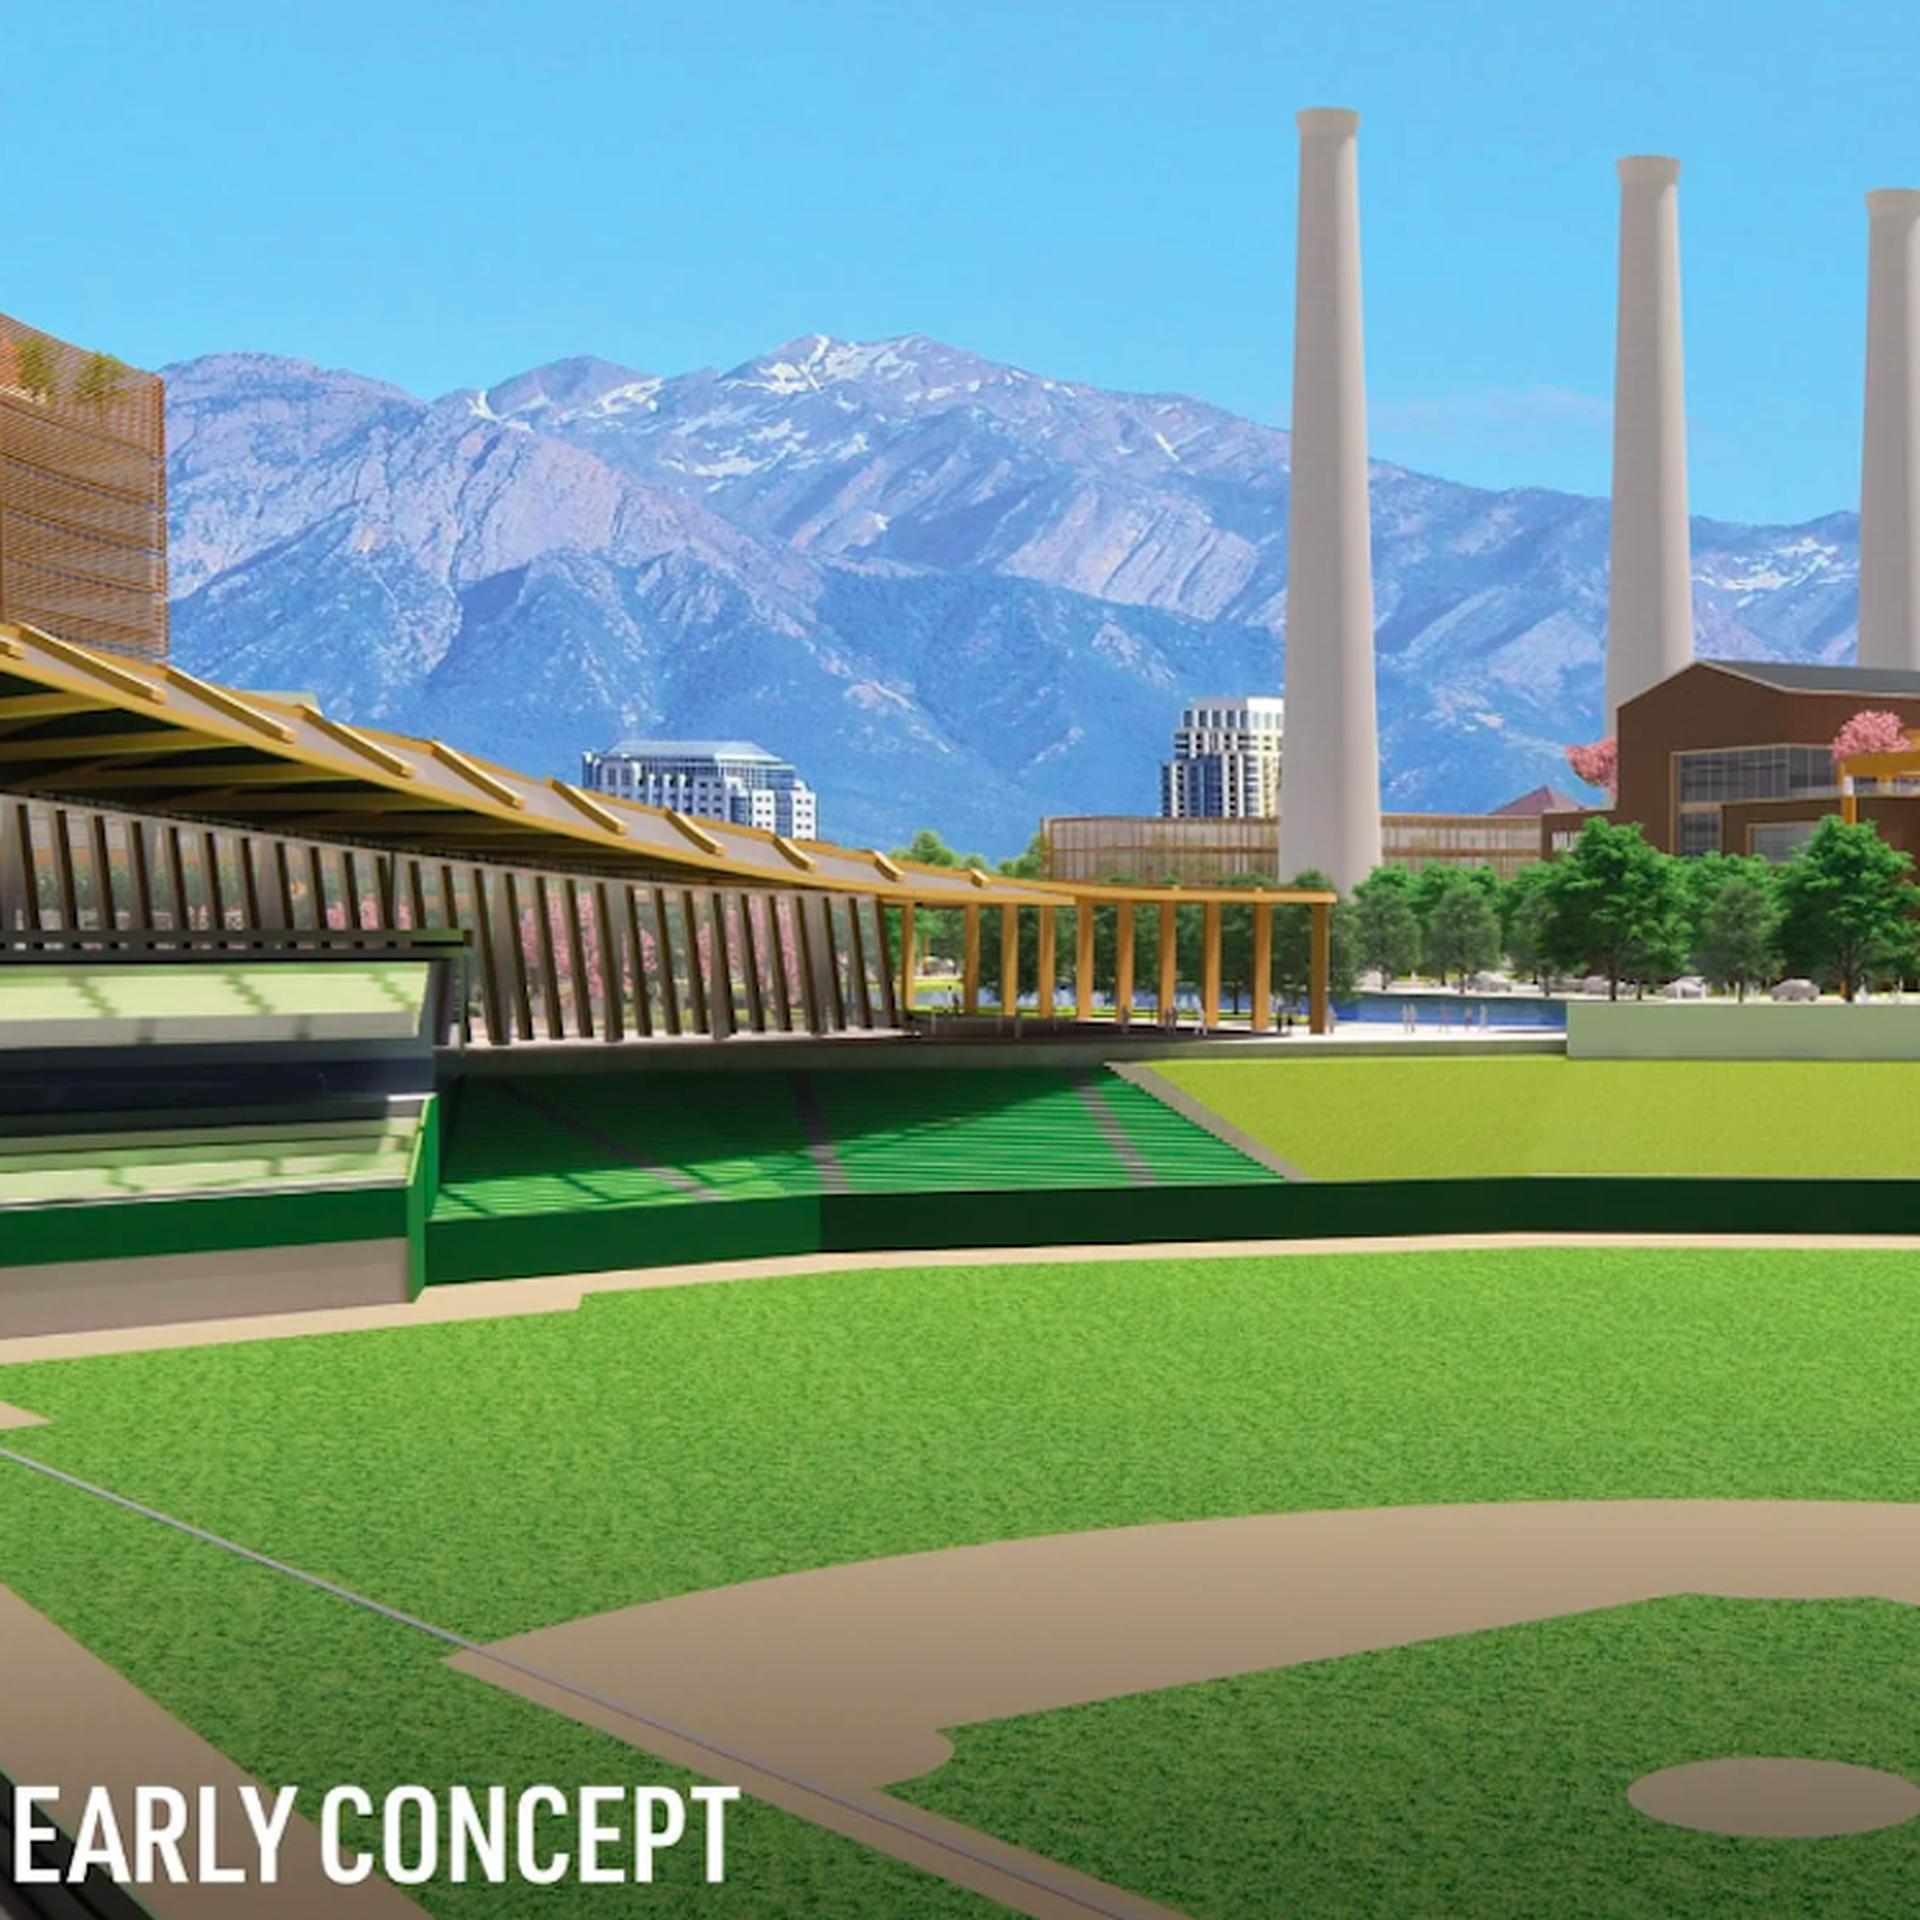 Salt Lake City seeks Major League Baseball expansion team - Axios